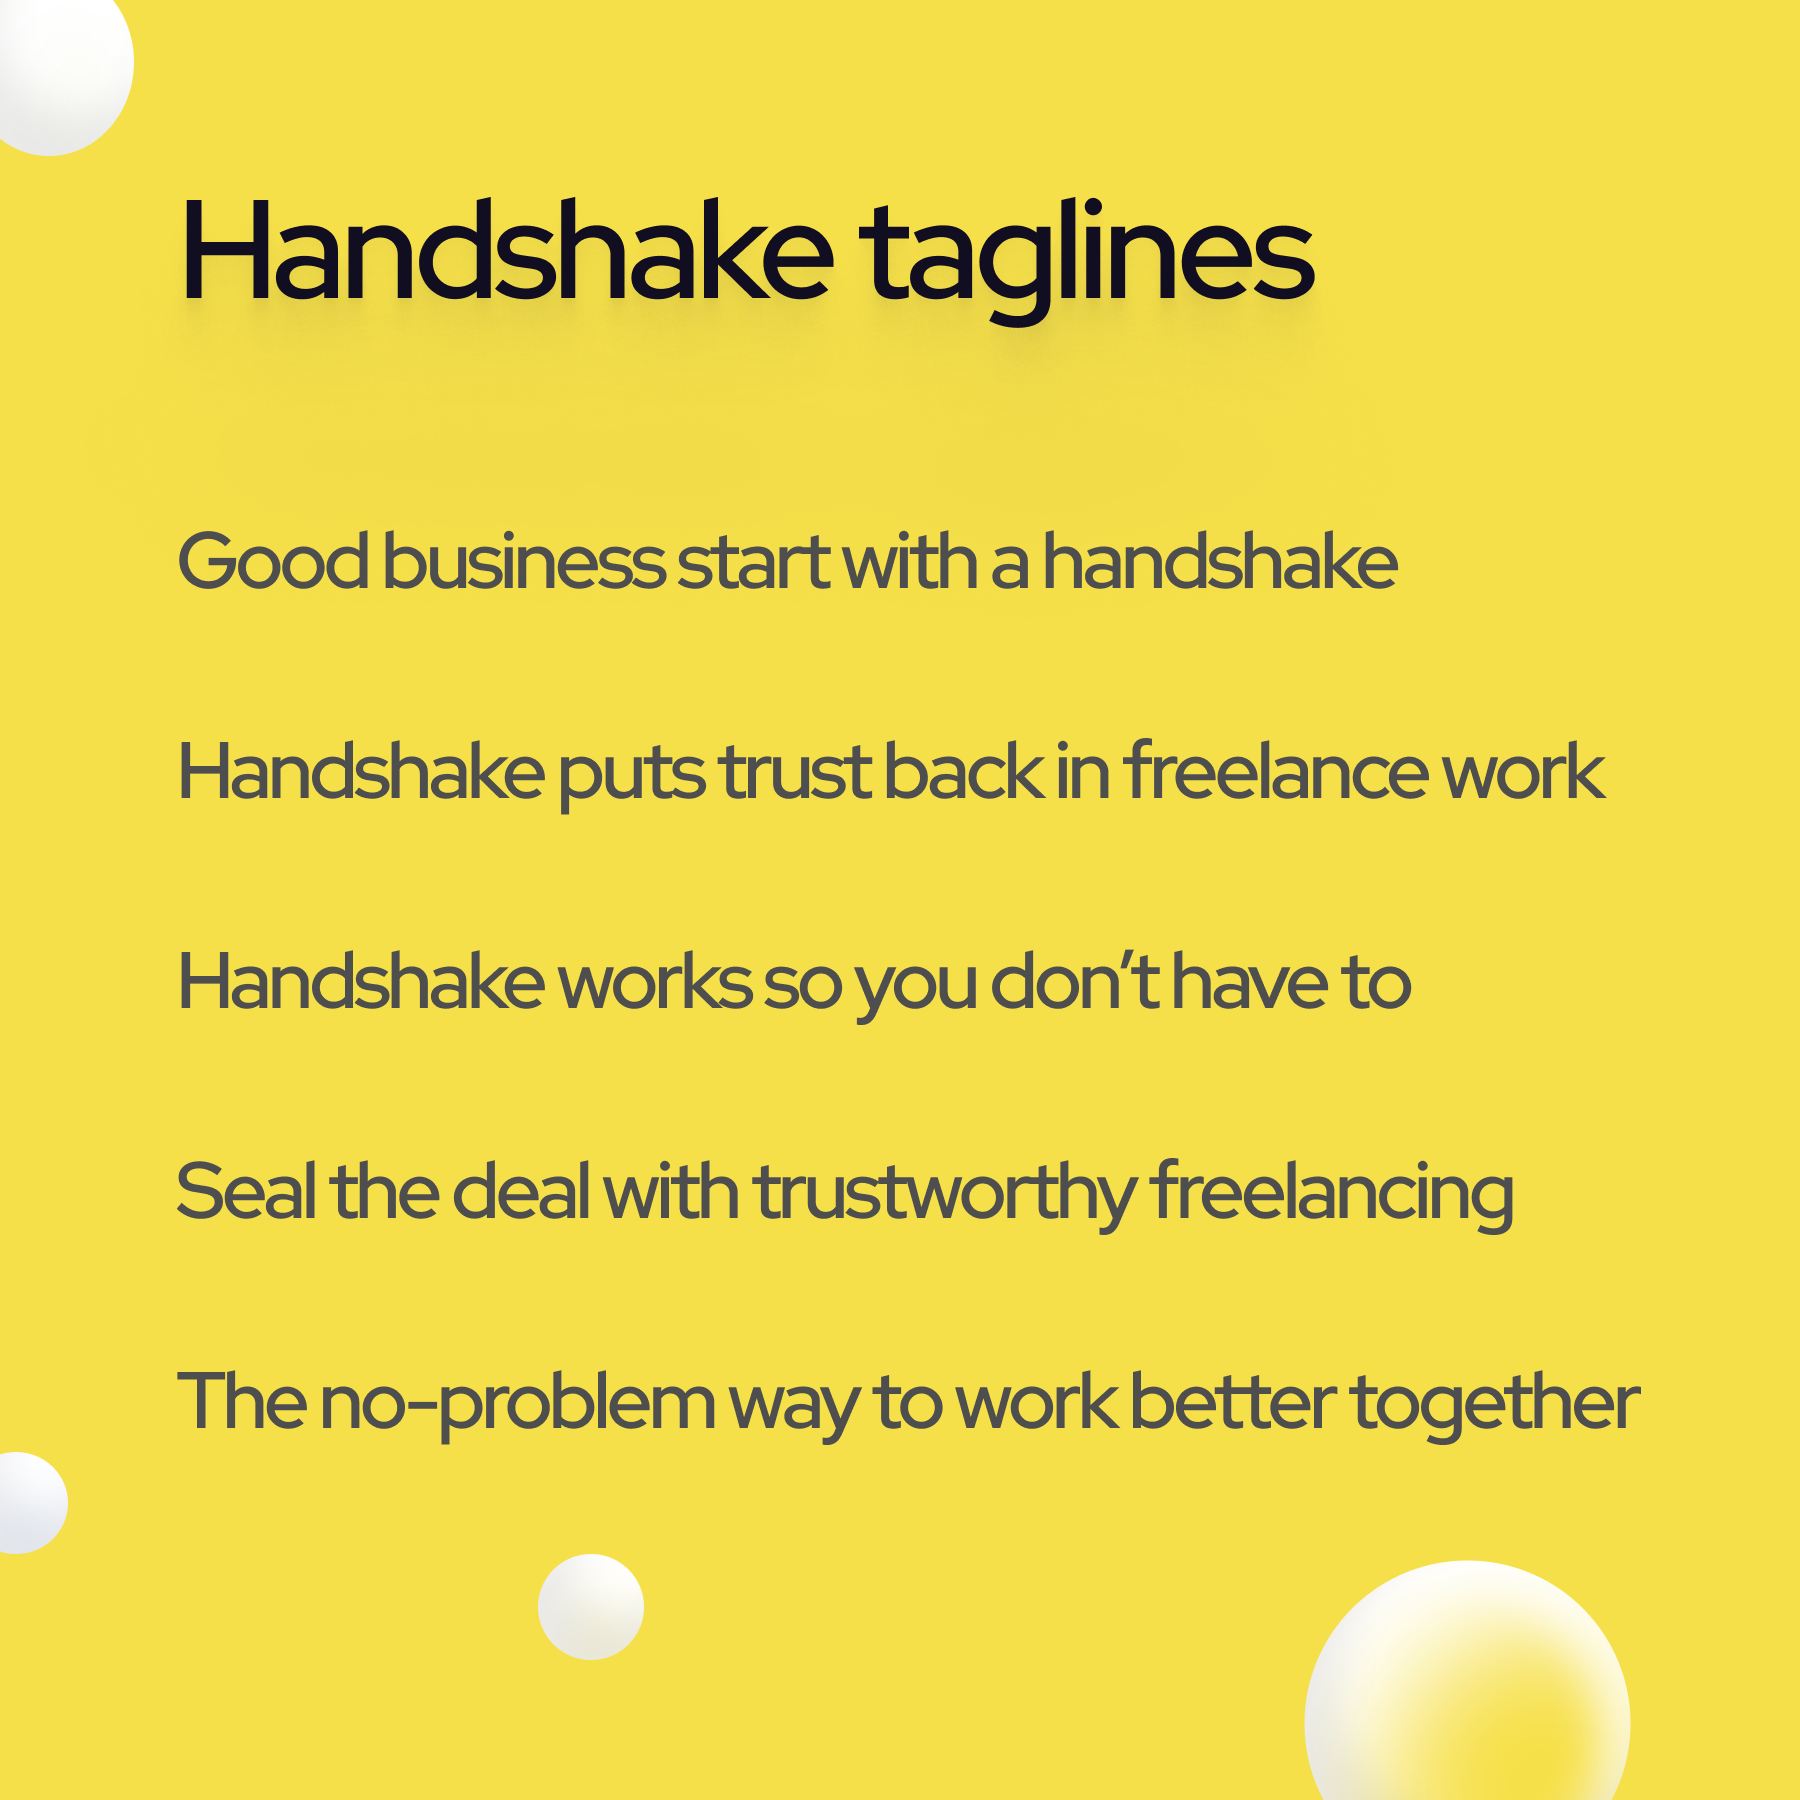 Handshake - product taglines.png